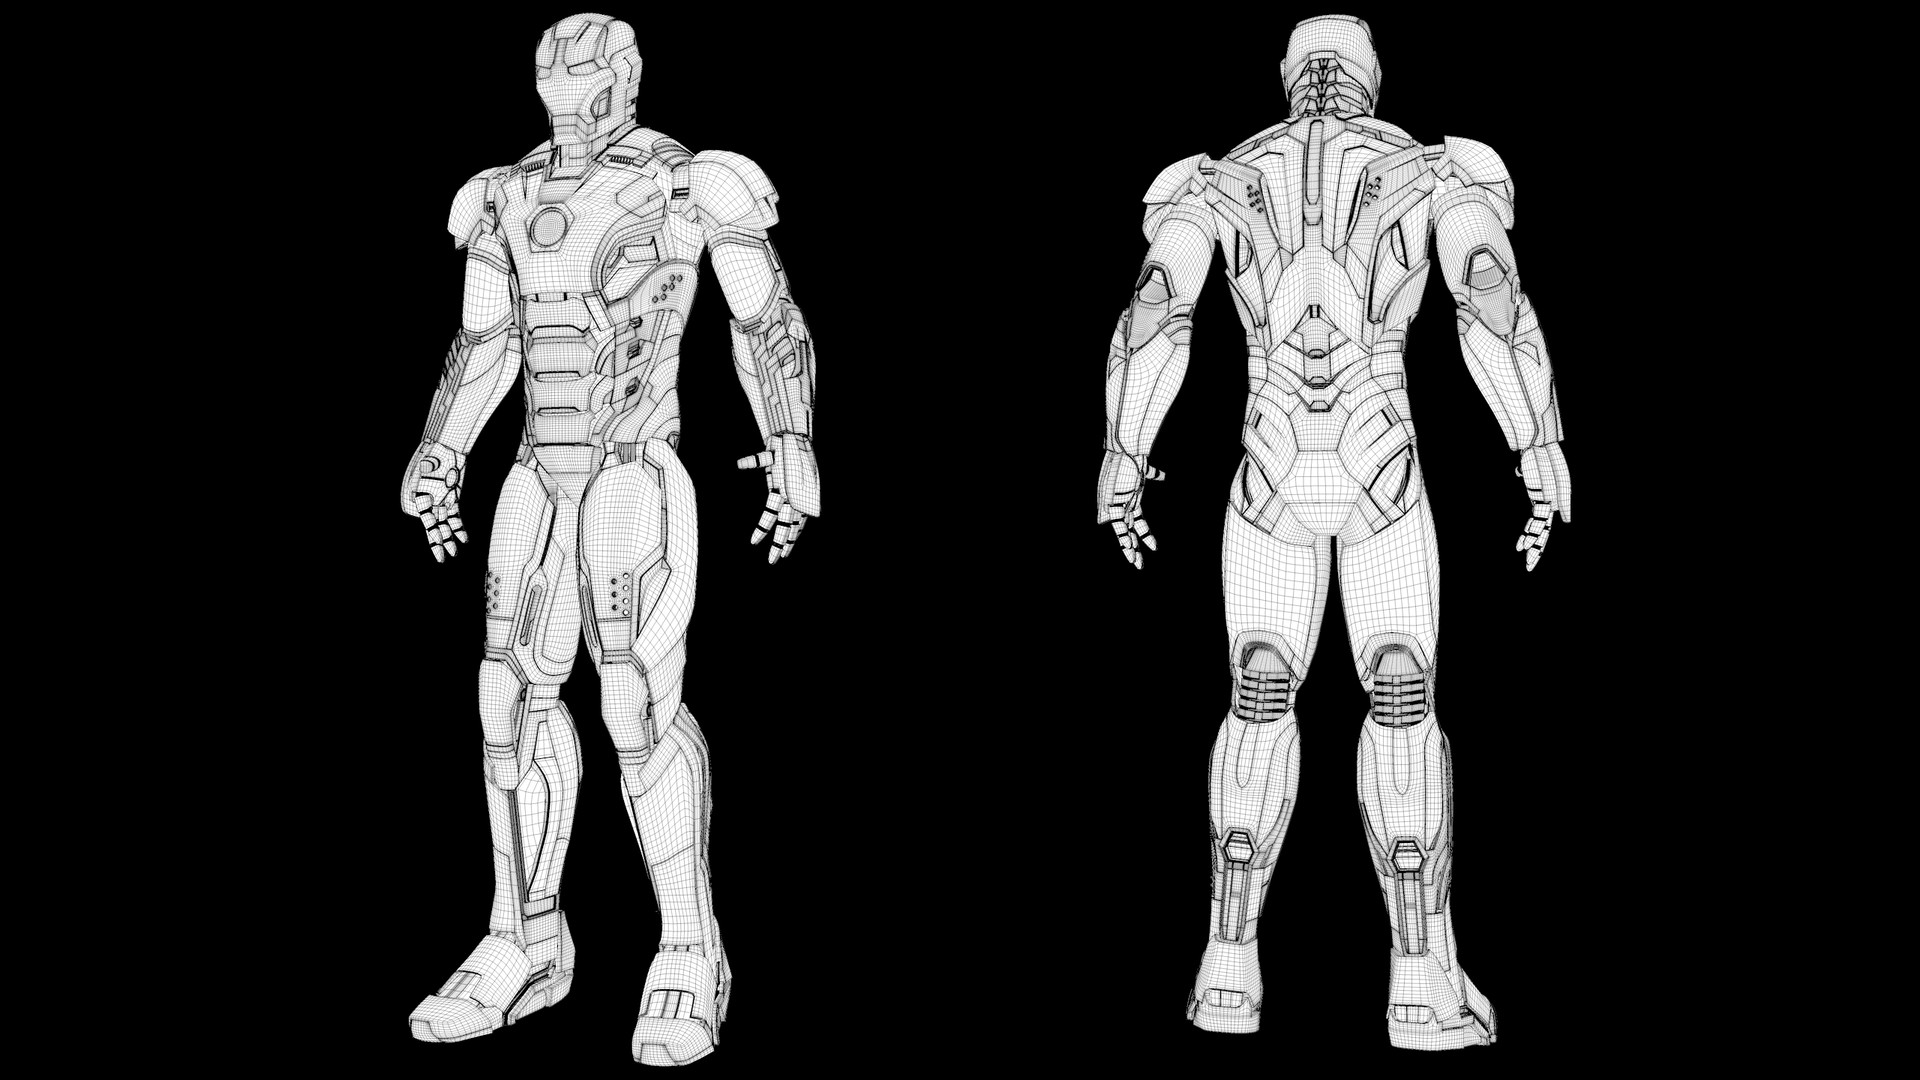 iron man vector blueprint